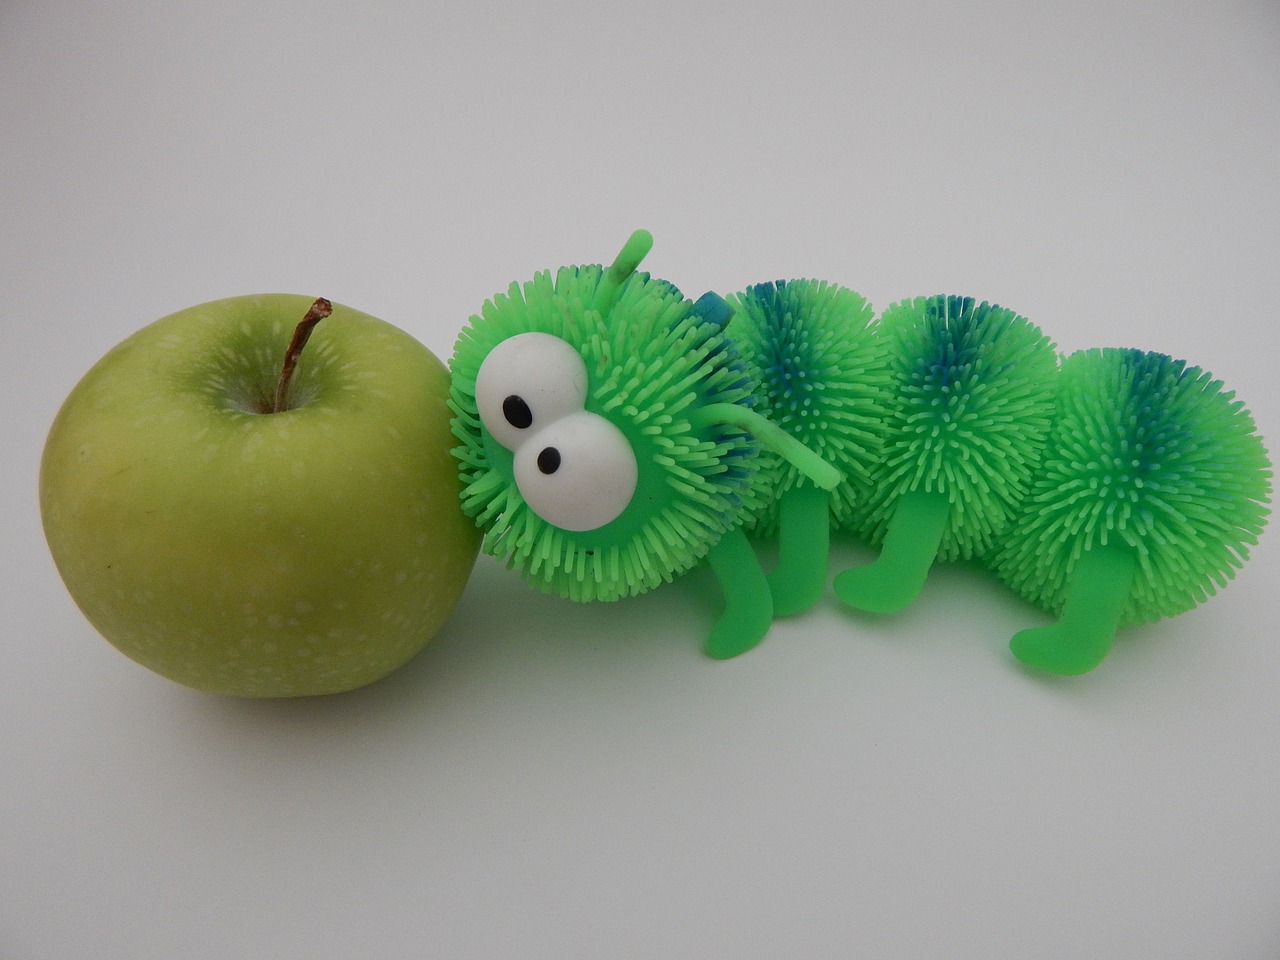 centipede apple worm free photo